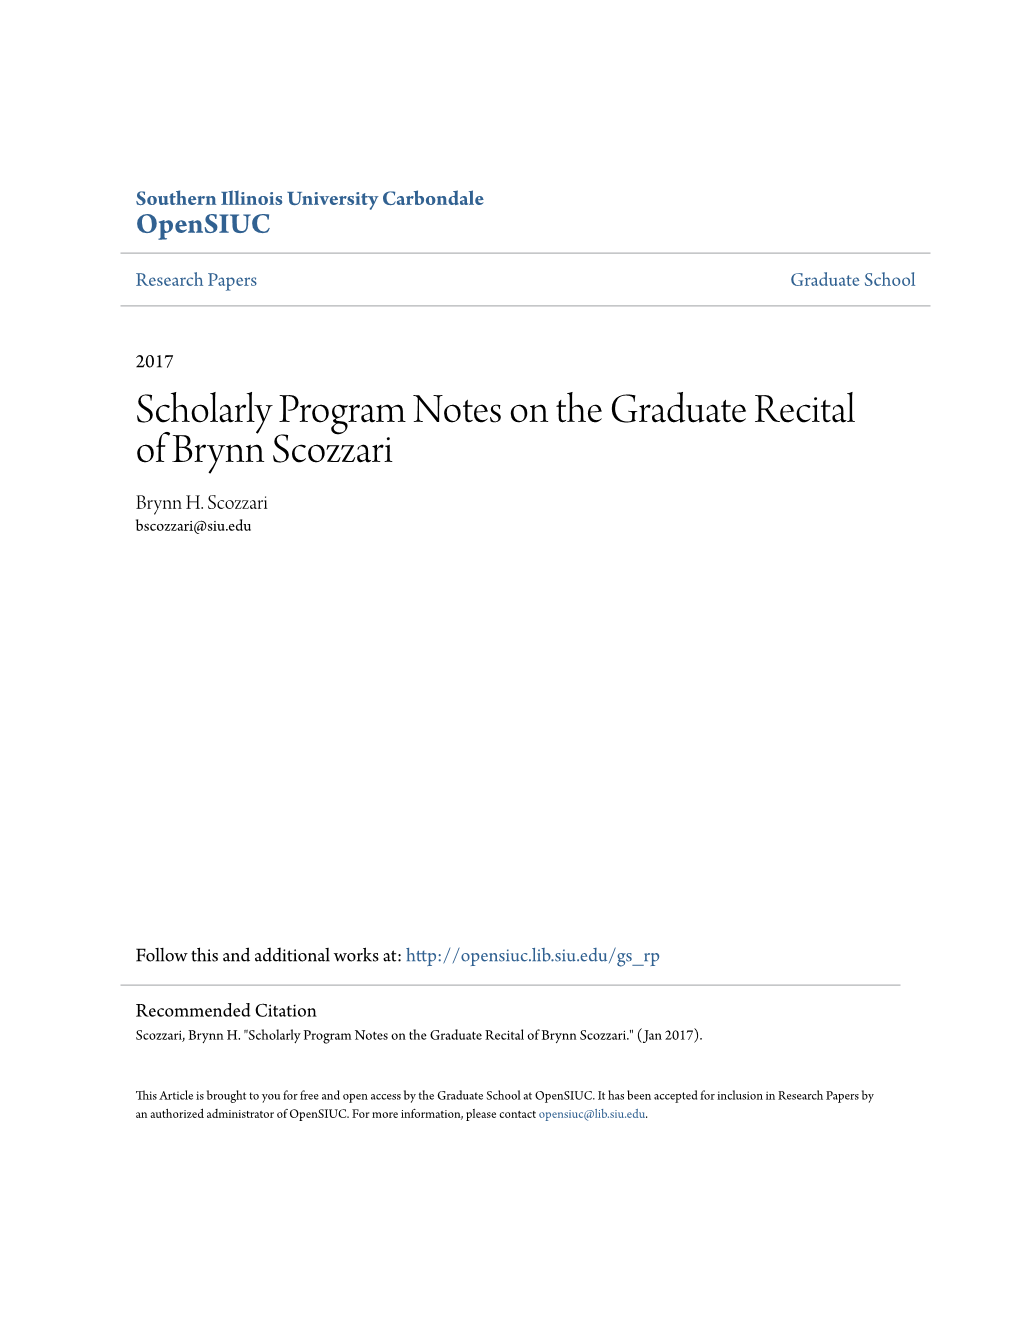 Scholarly Program Notes on the Graduate Recital of Brynn Scozzari Brynn H